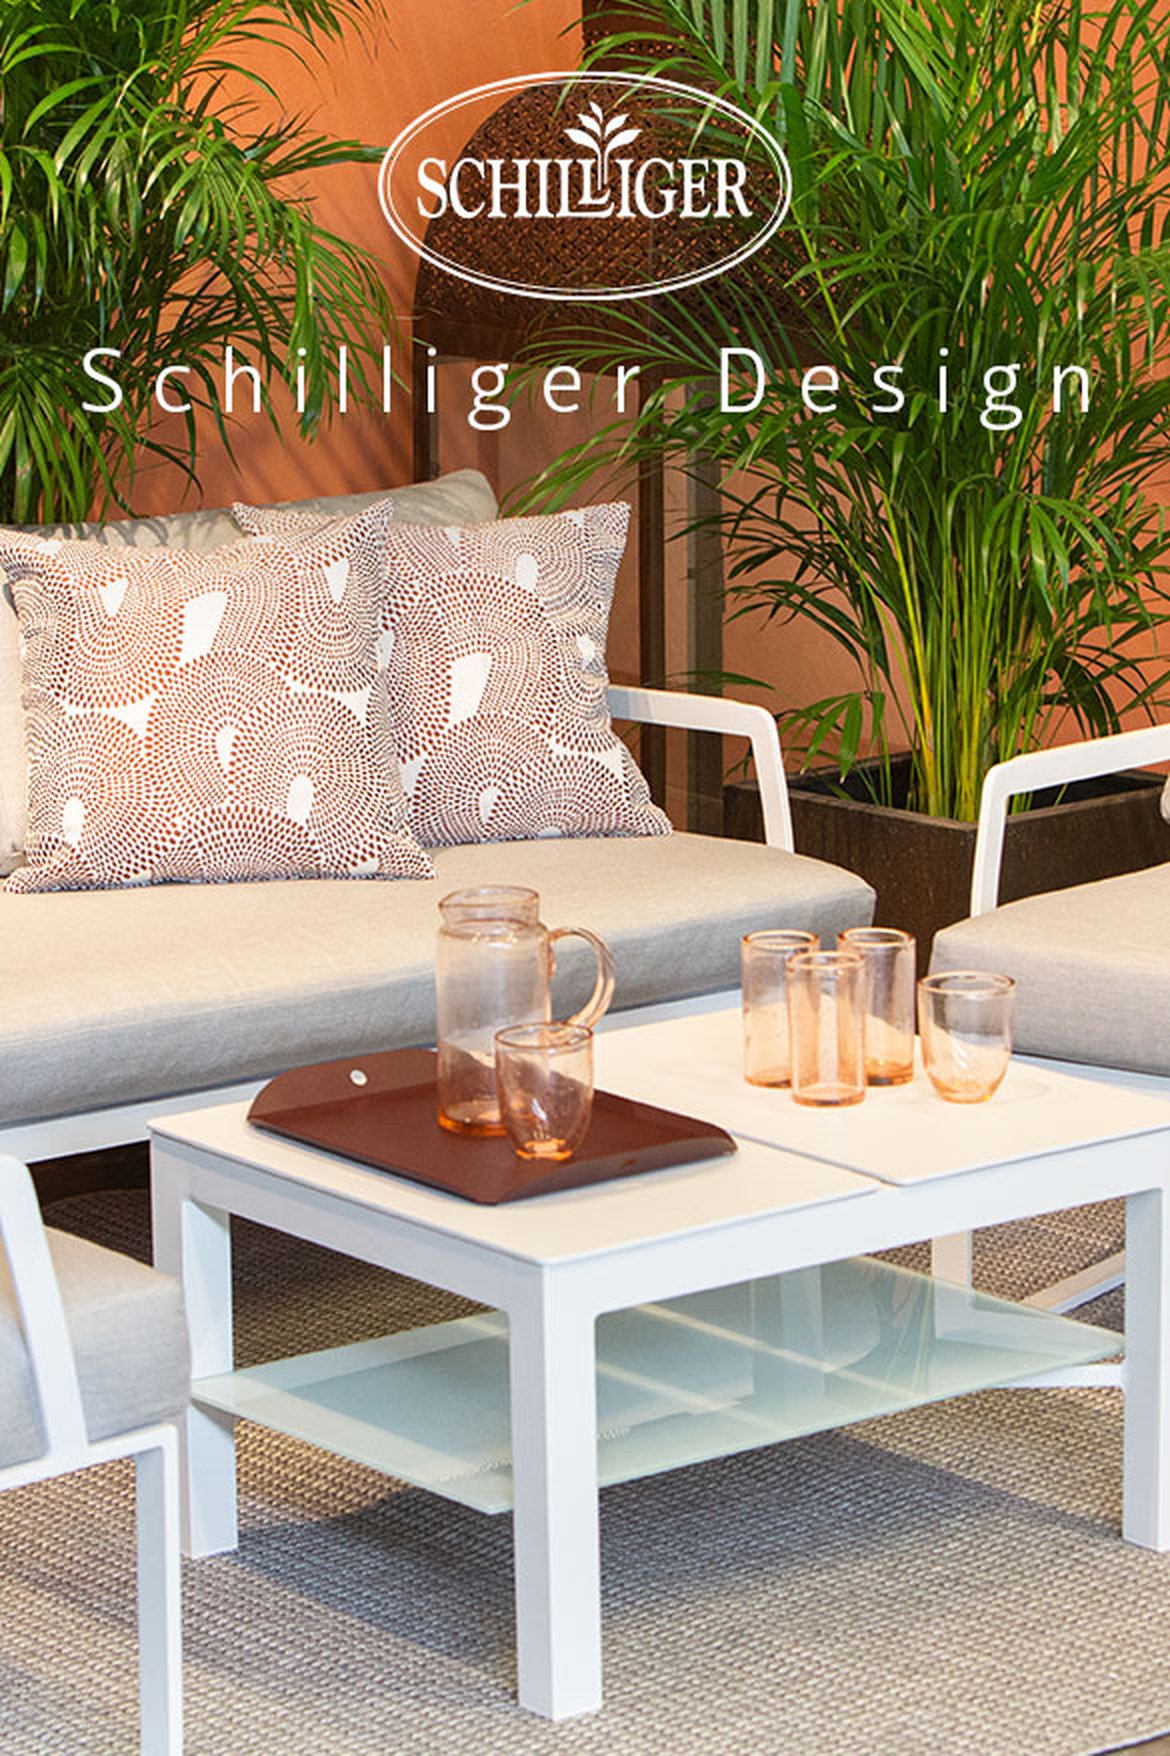 Mobilier de jardin Schilliger Design